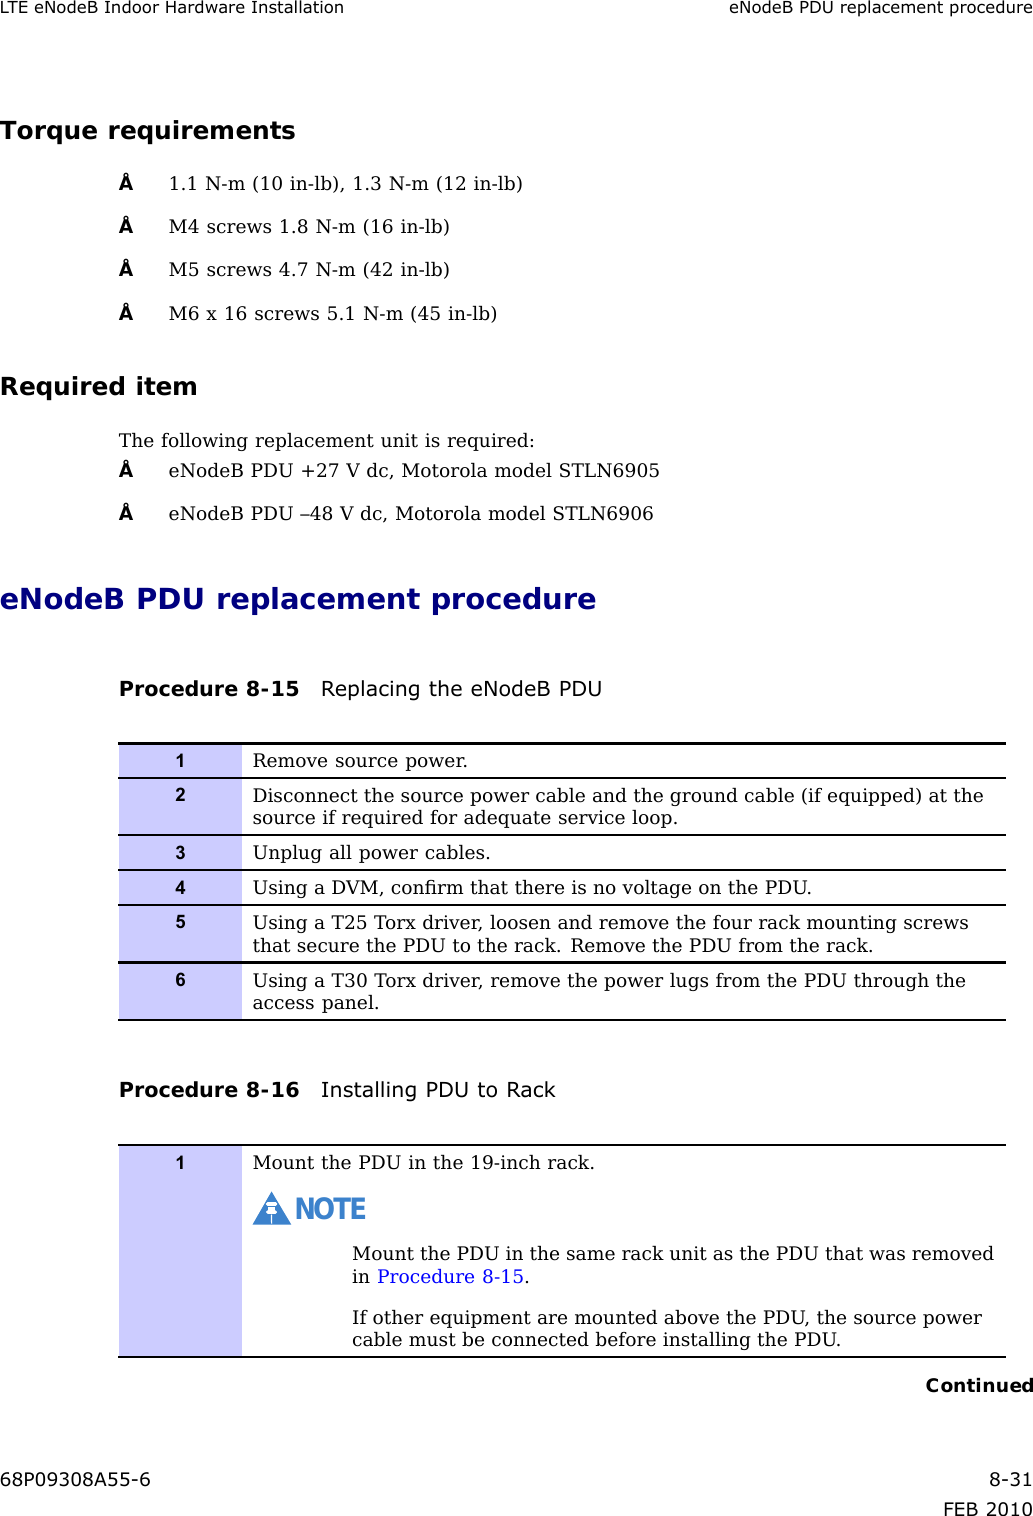 LTEeNodeBIndoorHardwareInstallationeNodeBPDUreplacementprocedureTorquerequirements•1.1N-m(10in-lb),1.3N-m(12in-lb)•M4screws1.8N-m(16in-lb)•M5screws4.7N-m(42in-lb)•M6x16screws5.1N-m(45in-lb)RequireditemThefollowingreplacementunitisrequired:•eNodeBPDU+27Vdc,MotorolamodelSTLN6905•eNodeBPDU–48Vdc,MotorolamodelSTLN6906eNodeBPDUreplacementprocedureProcedure8-15ReplacingtheeNodeBPDU1Removesourcepower.2Disconnectthesourcepowercableandthegroundcable(ifequipped)atthesourceifrequiredforadequateserviceloop.3Unplugallpowercables.4UsingaDVM,conrmthatthereisnovoltageonthePDU.5UsingaT25Torxdriver,loosenandremovethefourrackmountingscrewsthatsecurethePDUtotherack.RemovethePDUfromtherack.6UsingaT30Torxdriver,removethepowerlugsfromthePDUthroughtheaccesspanel.Procedure8-16InstallingPDUtoRack1MountthePDUinthe19-inchrack.NOTEMountthePDUinthesamerackunitasthePDUthatwasremovedinProcedure8-15.IfotherequipmentaremountedabovethePDU,thesourcepowercablemustbeconnectedbeforeinstallingthePDU.Continued68P09308A55-68-31FEB2010